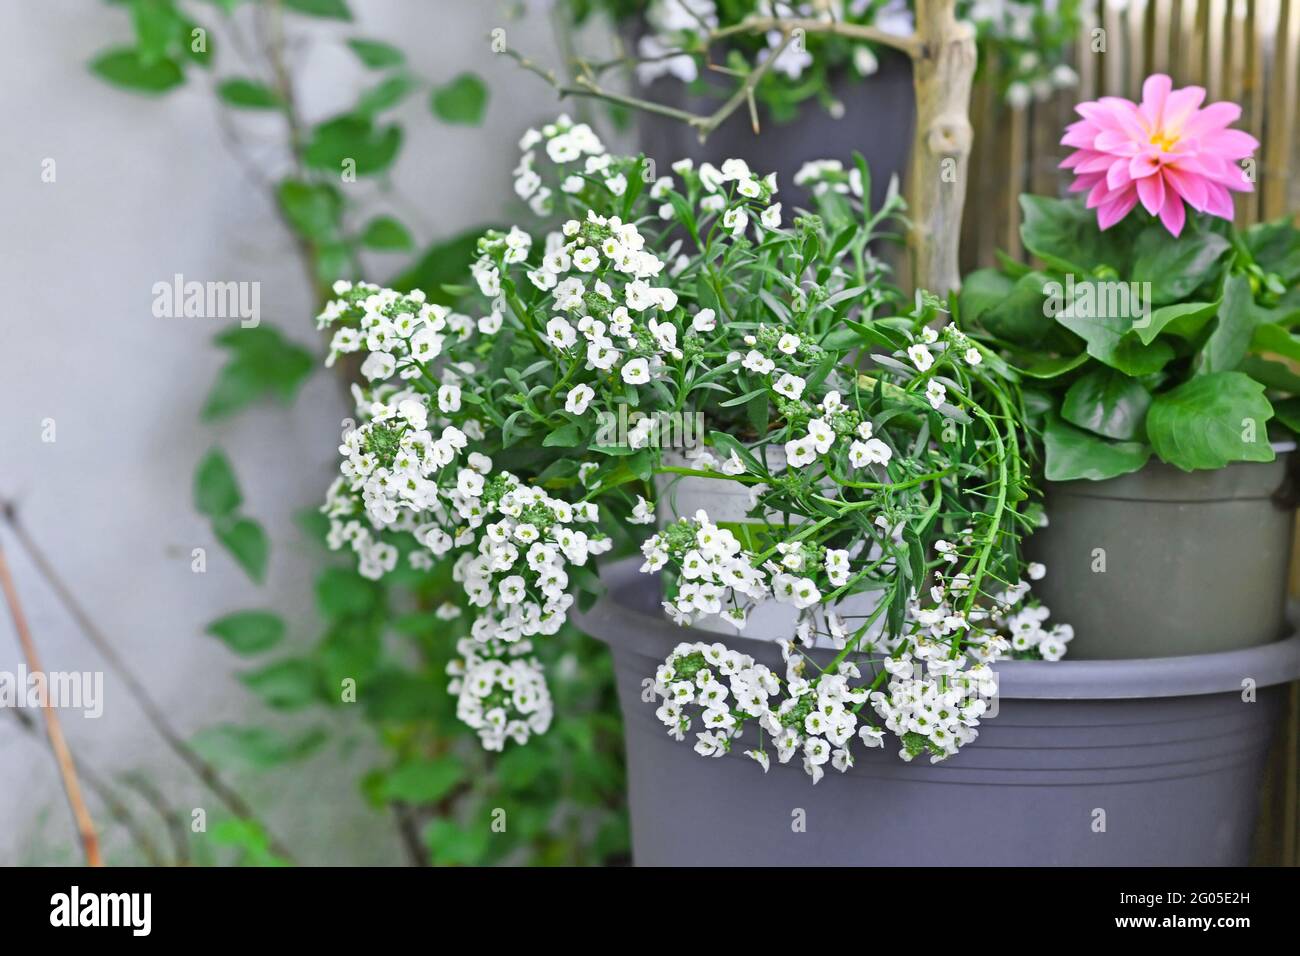 Pflanze „Lobularia Snow Princess“ mit kleinen weißen Blüten im Korbtopf  Stockfotografie - Alamy